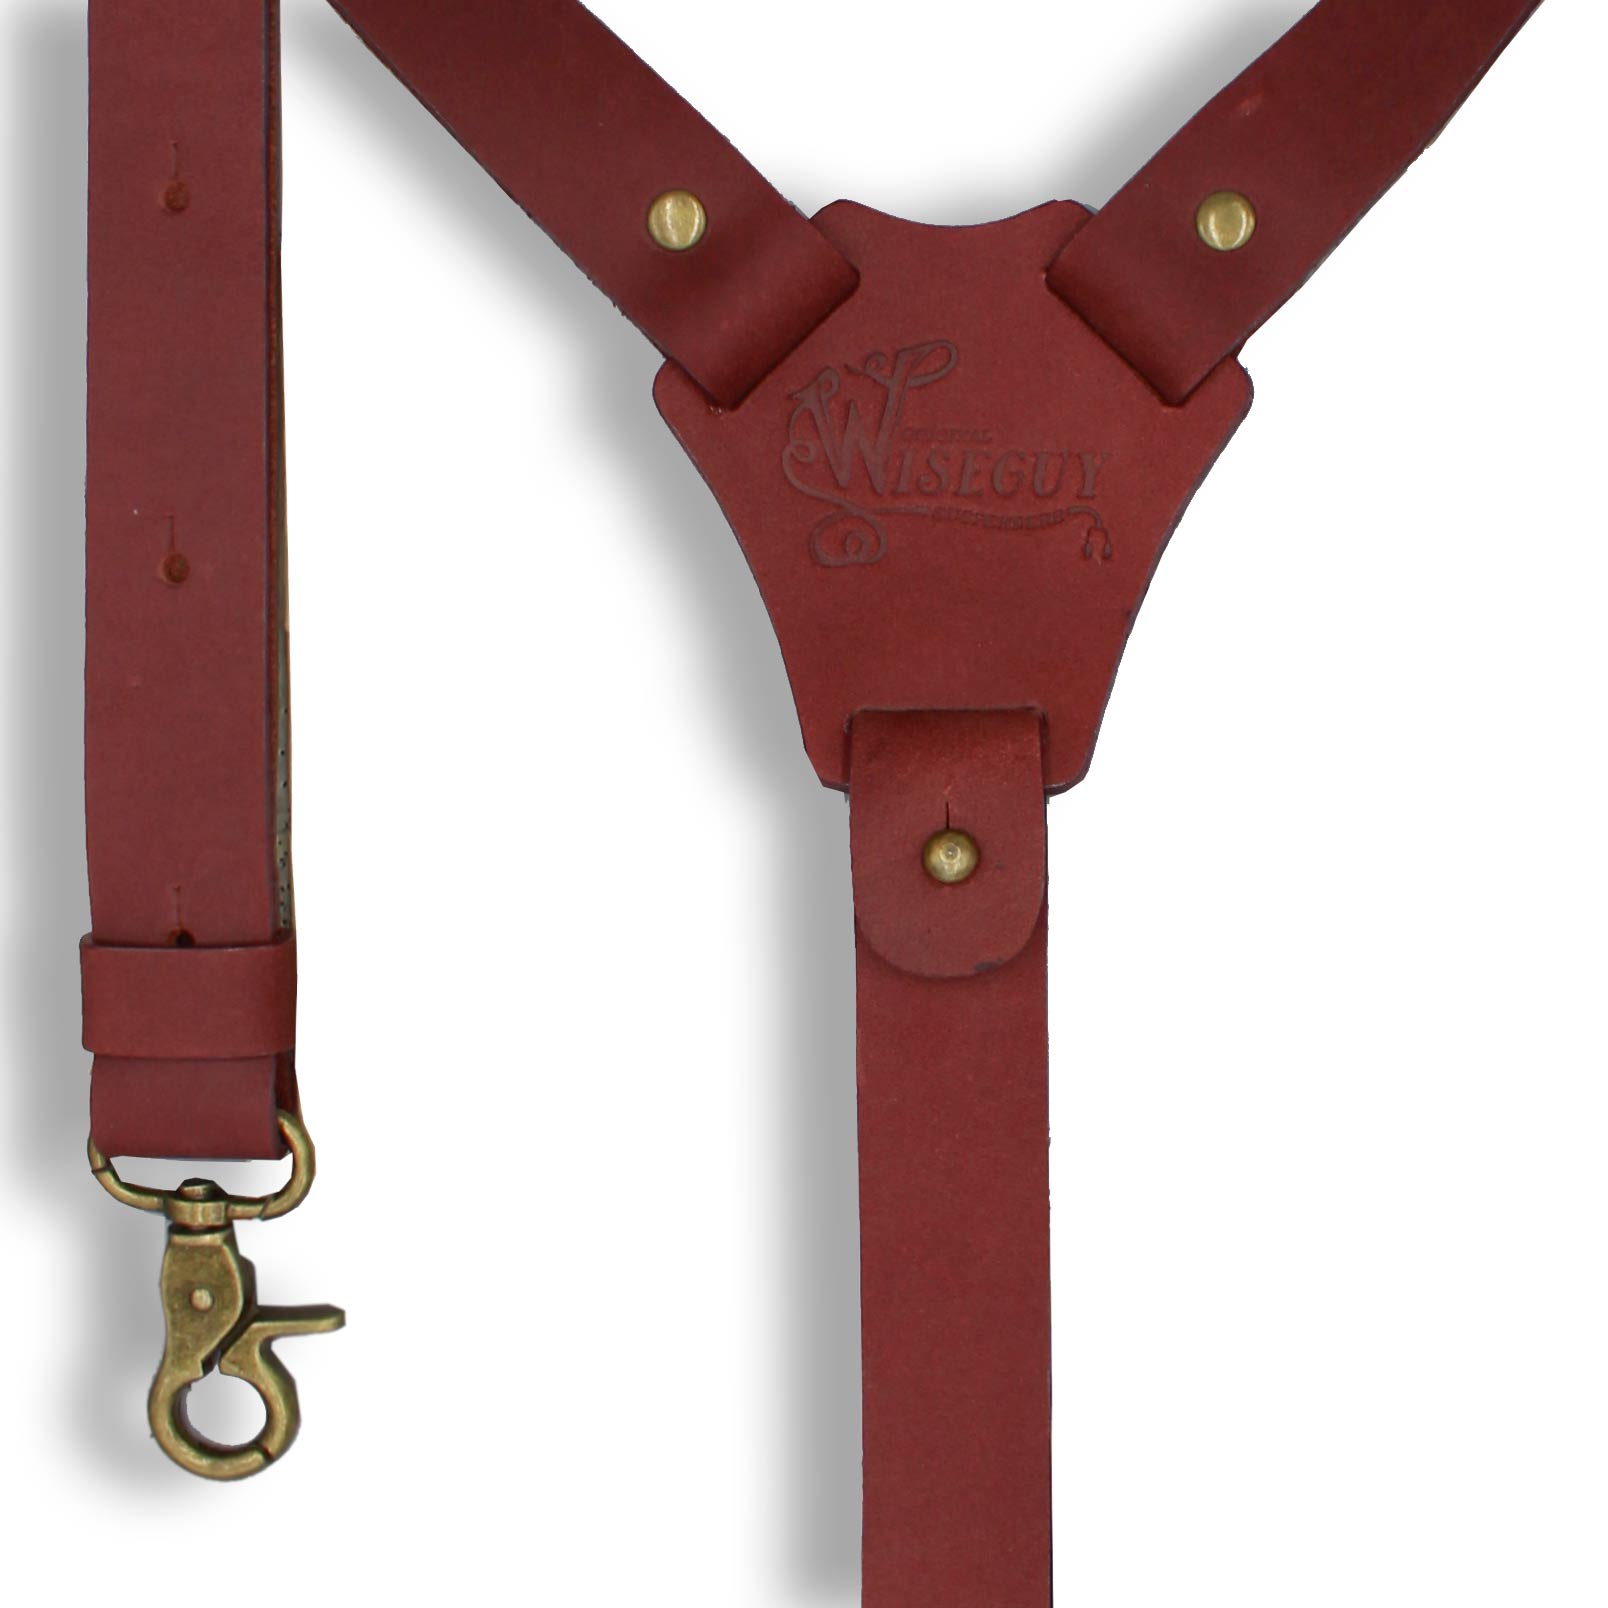 New Men's Braces Fashion Leather Suspenders 6 Cclips Suspensorios  Adjustable Belt Strap High Quality Tirantes 3.5*120cm